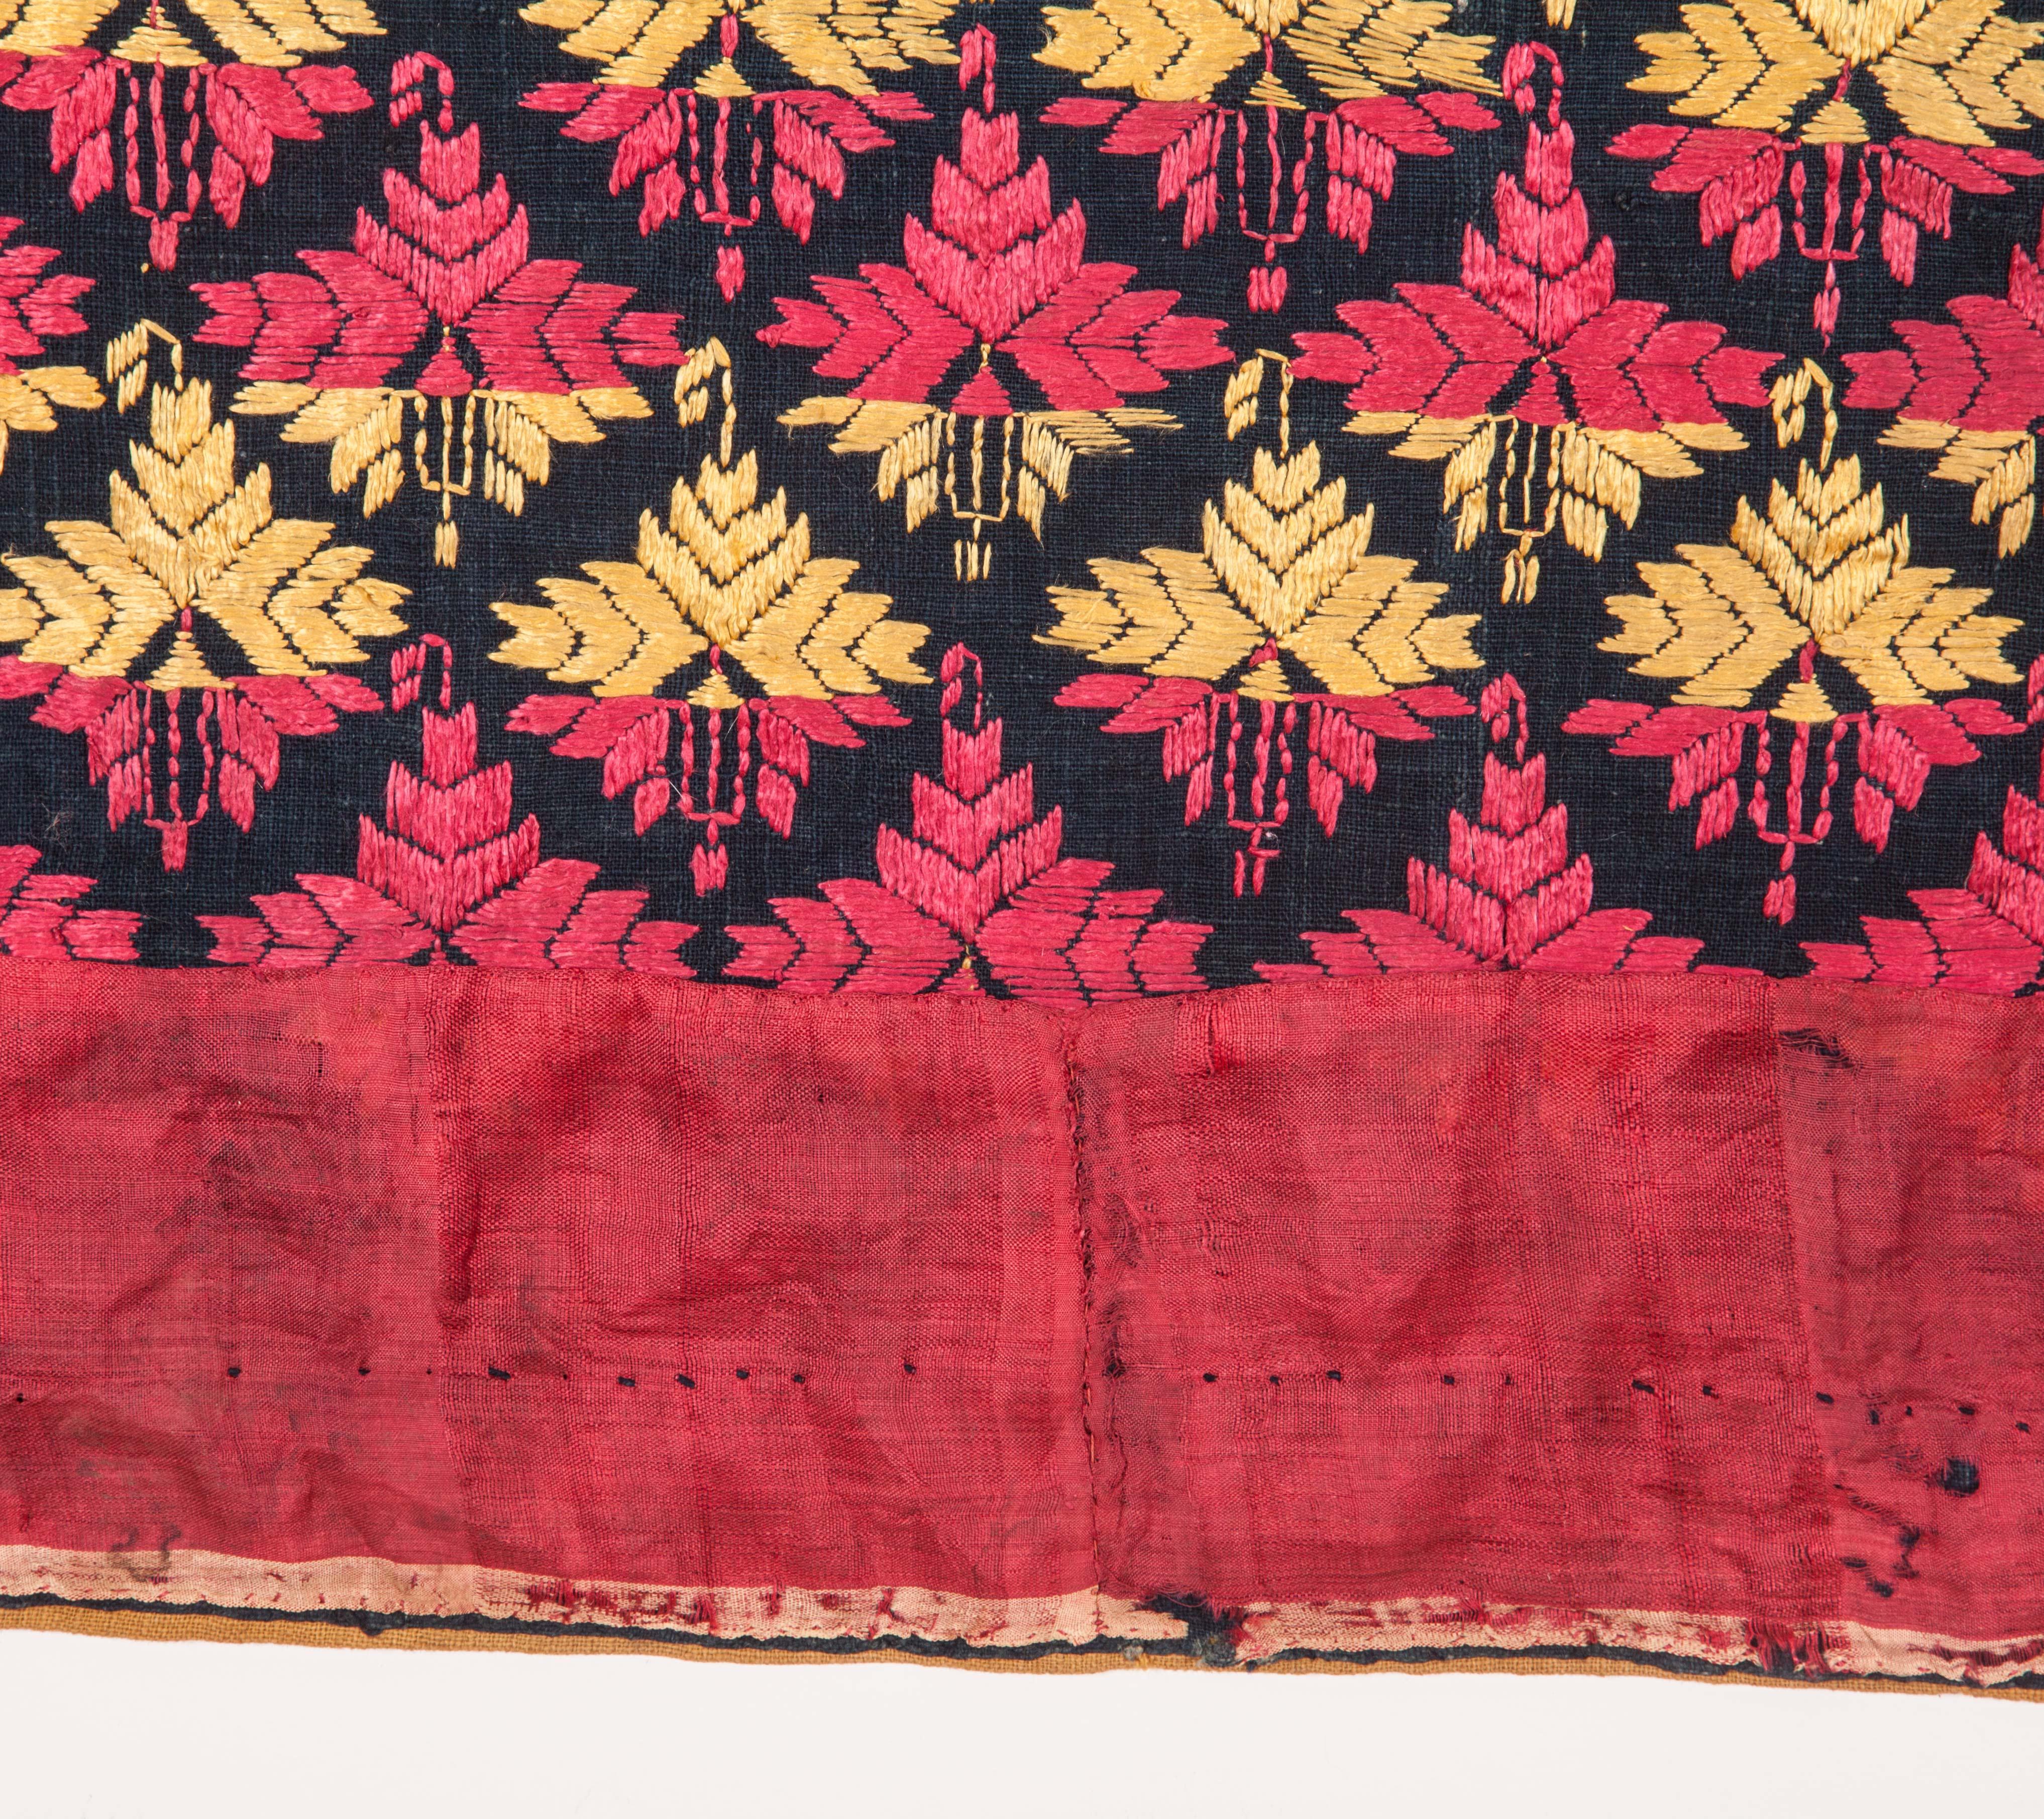 Embroidered Antique Indian Phulkari Opened Up Skirt on Indigo, Early 20th Century